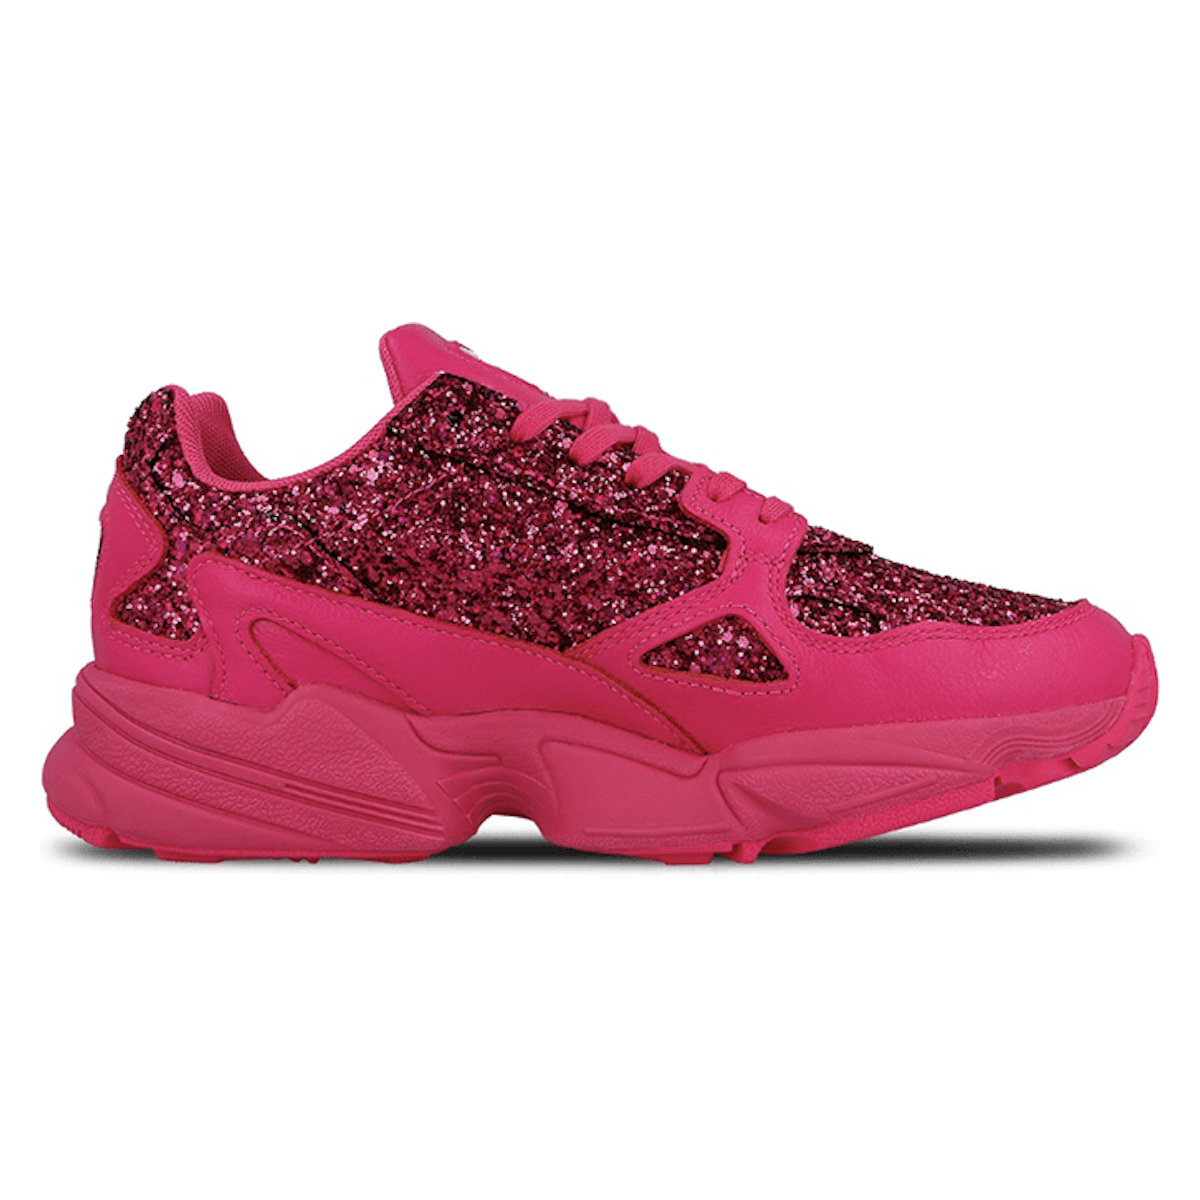 Adidas Falcon WMNS "Shock Pink"